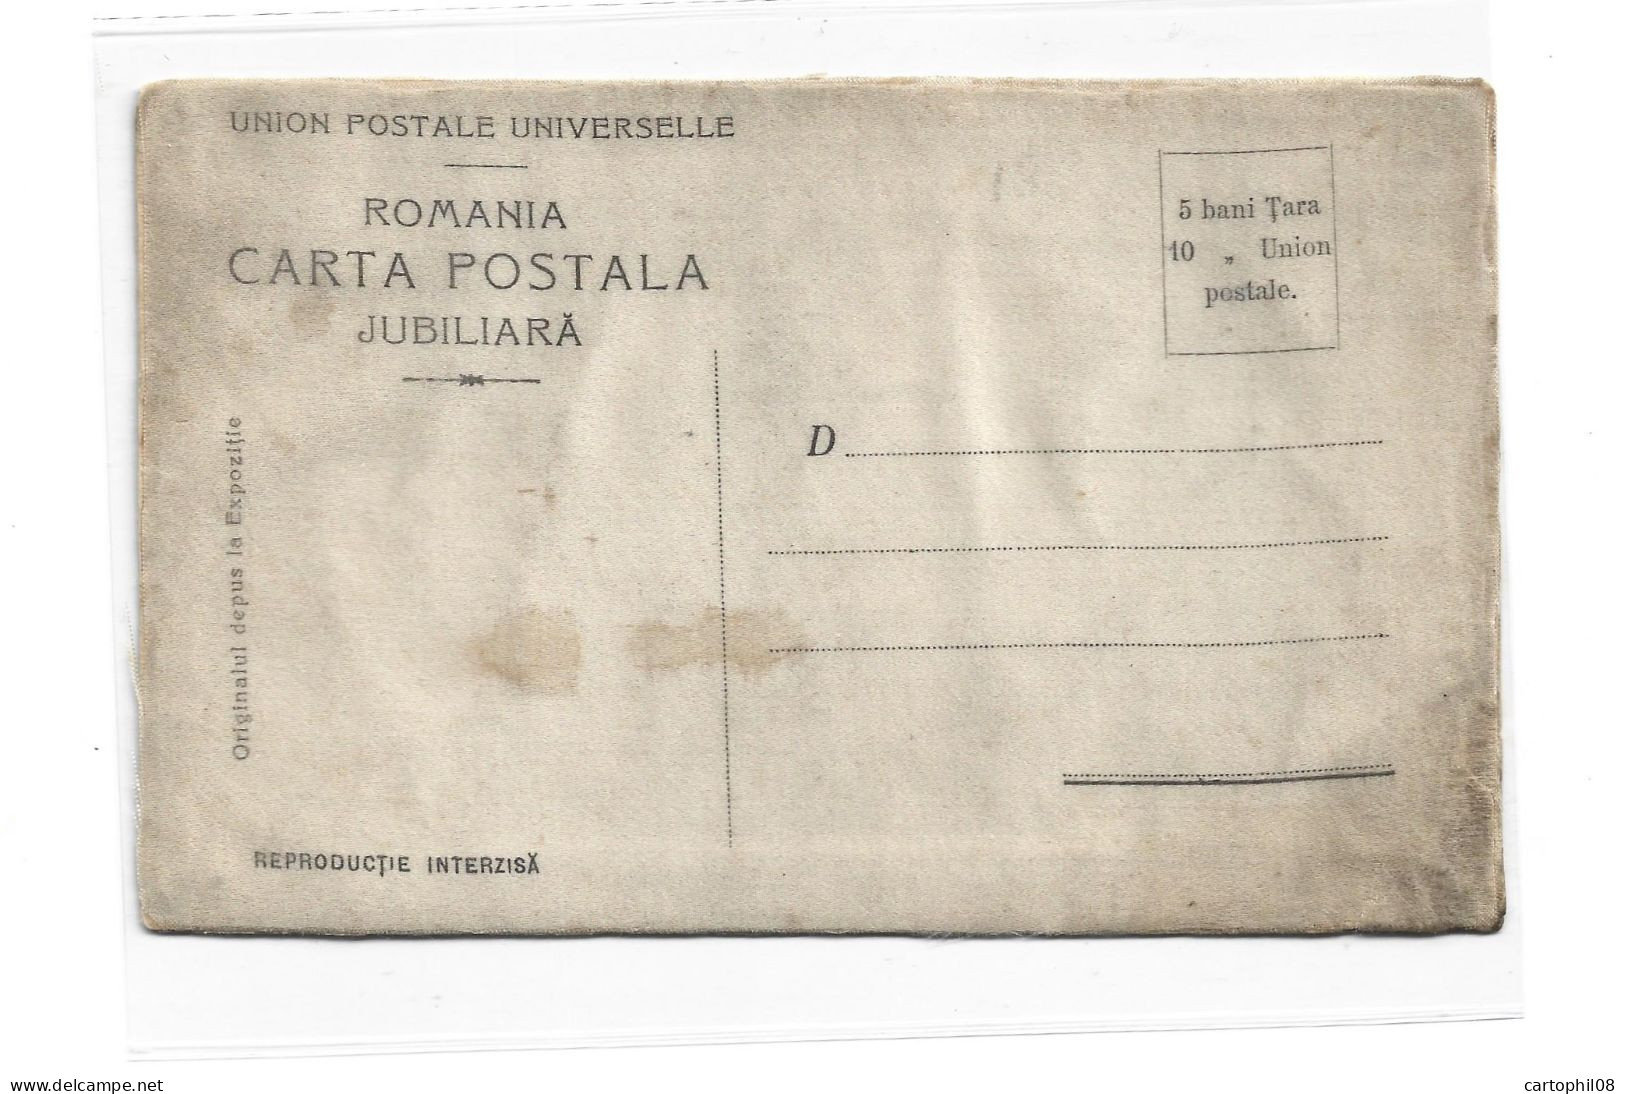 ROMANIA RARE - CAROL JUBILEUL DE 40 ANI - CARTE POSTALA  JUBILIARA 1906 PE MATASE / ON SILK - Romania